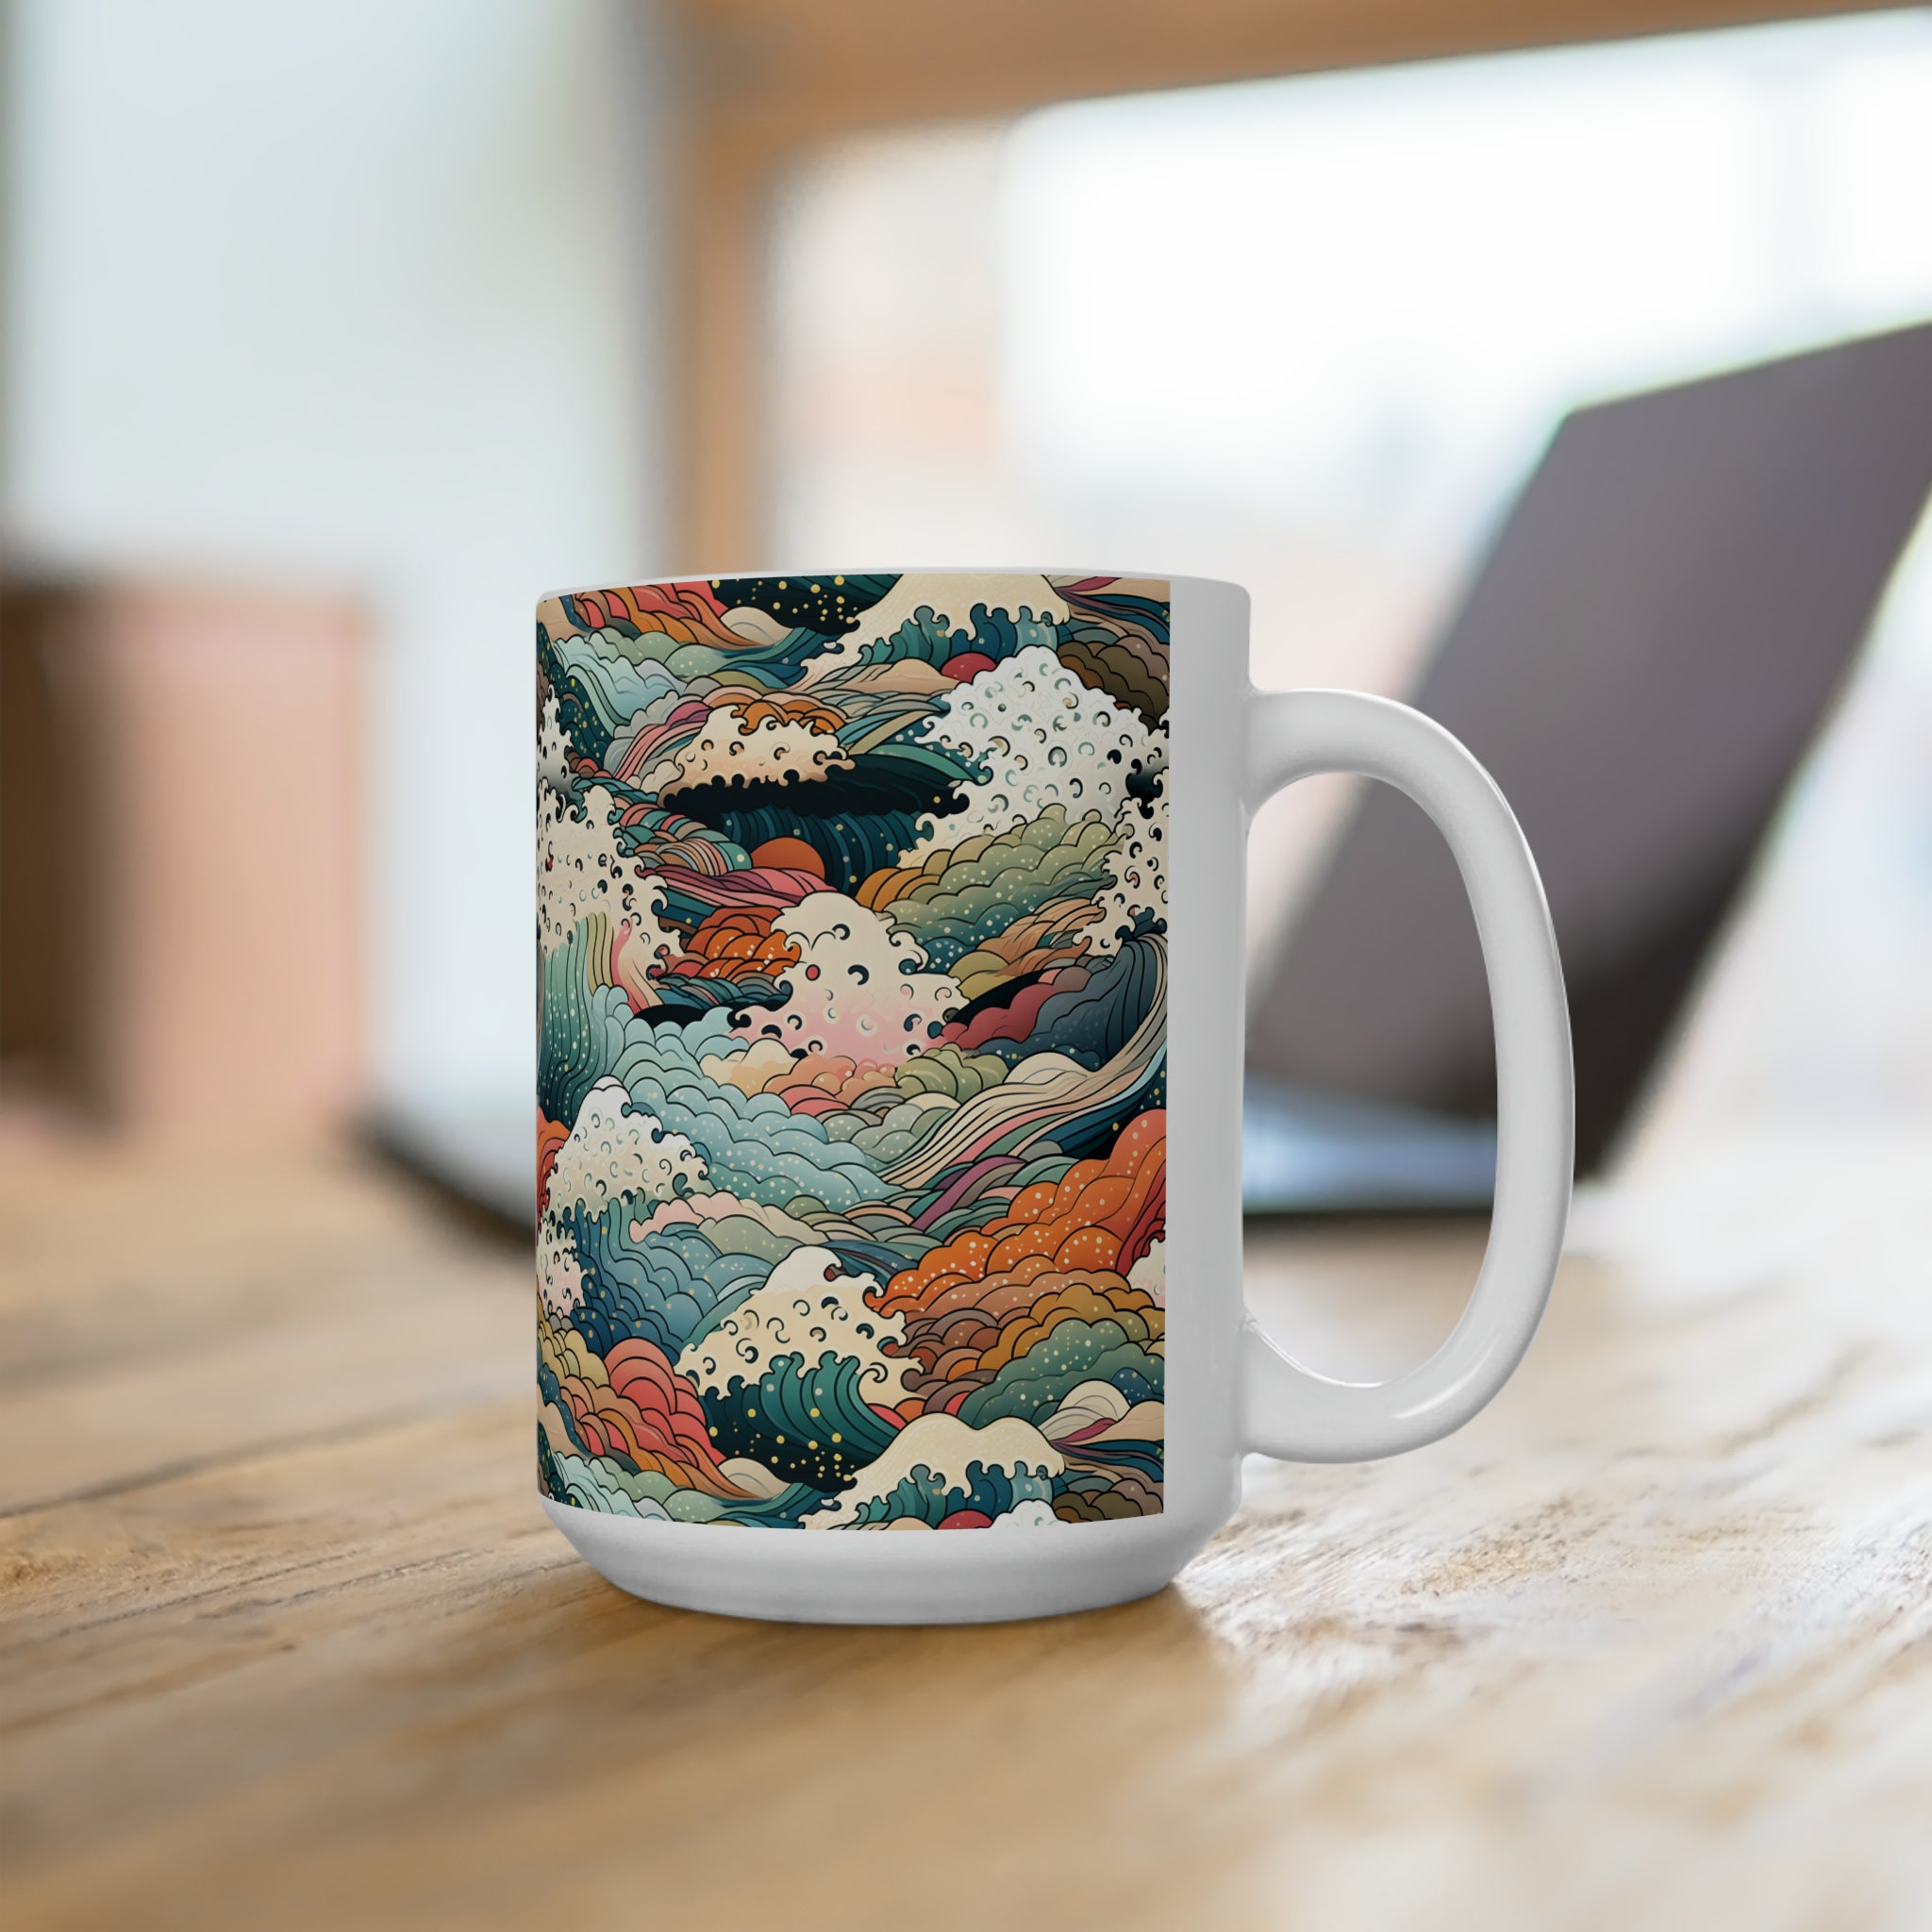 Turbulent Seas Mug 15 oz